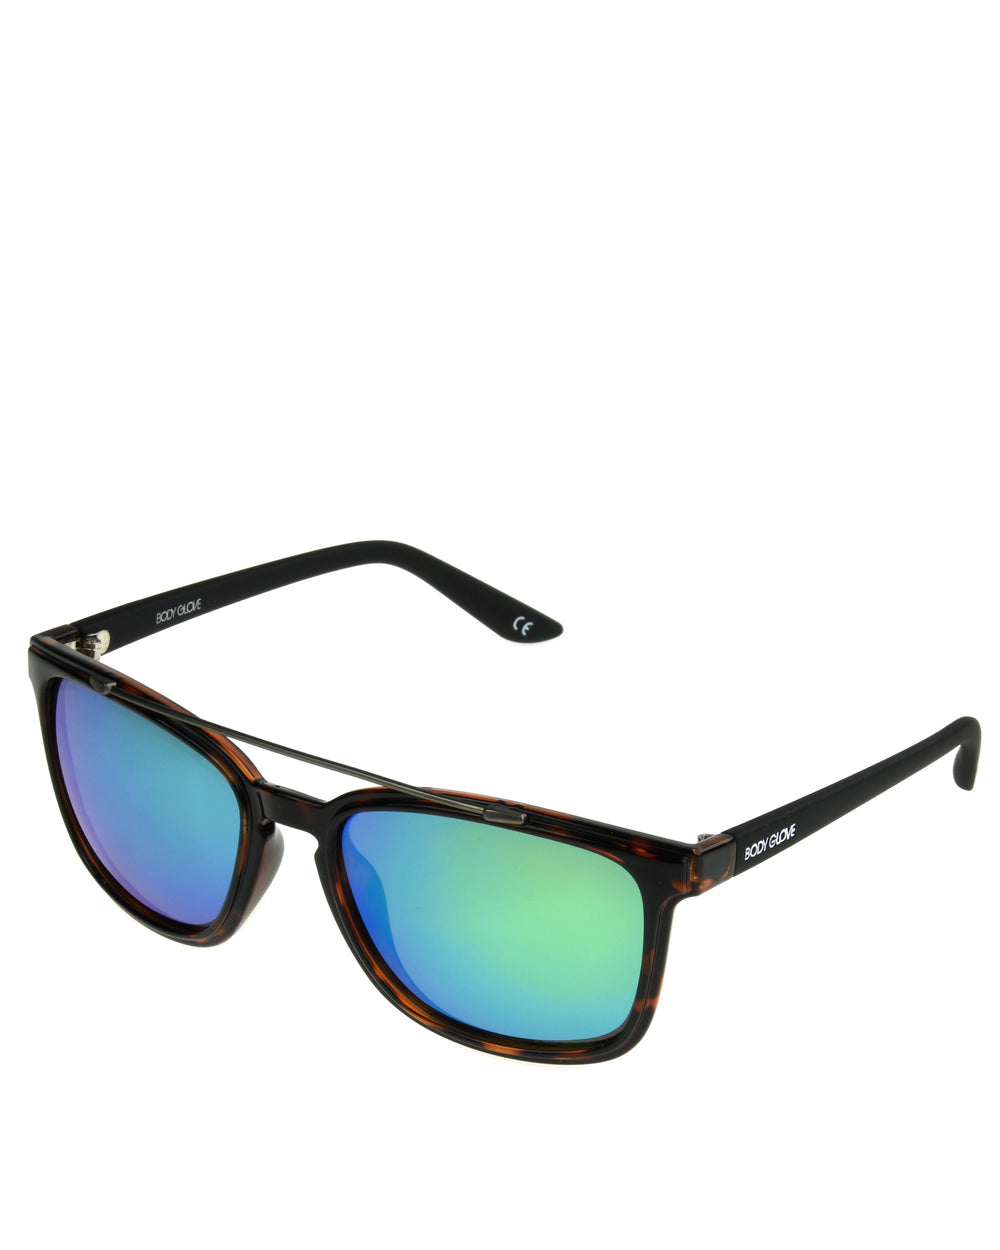 Women's BG1804 Polarized Sunglasses - Dark Brown